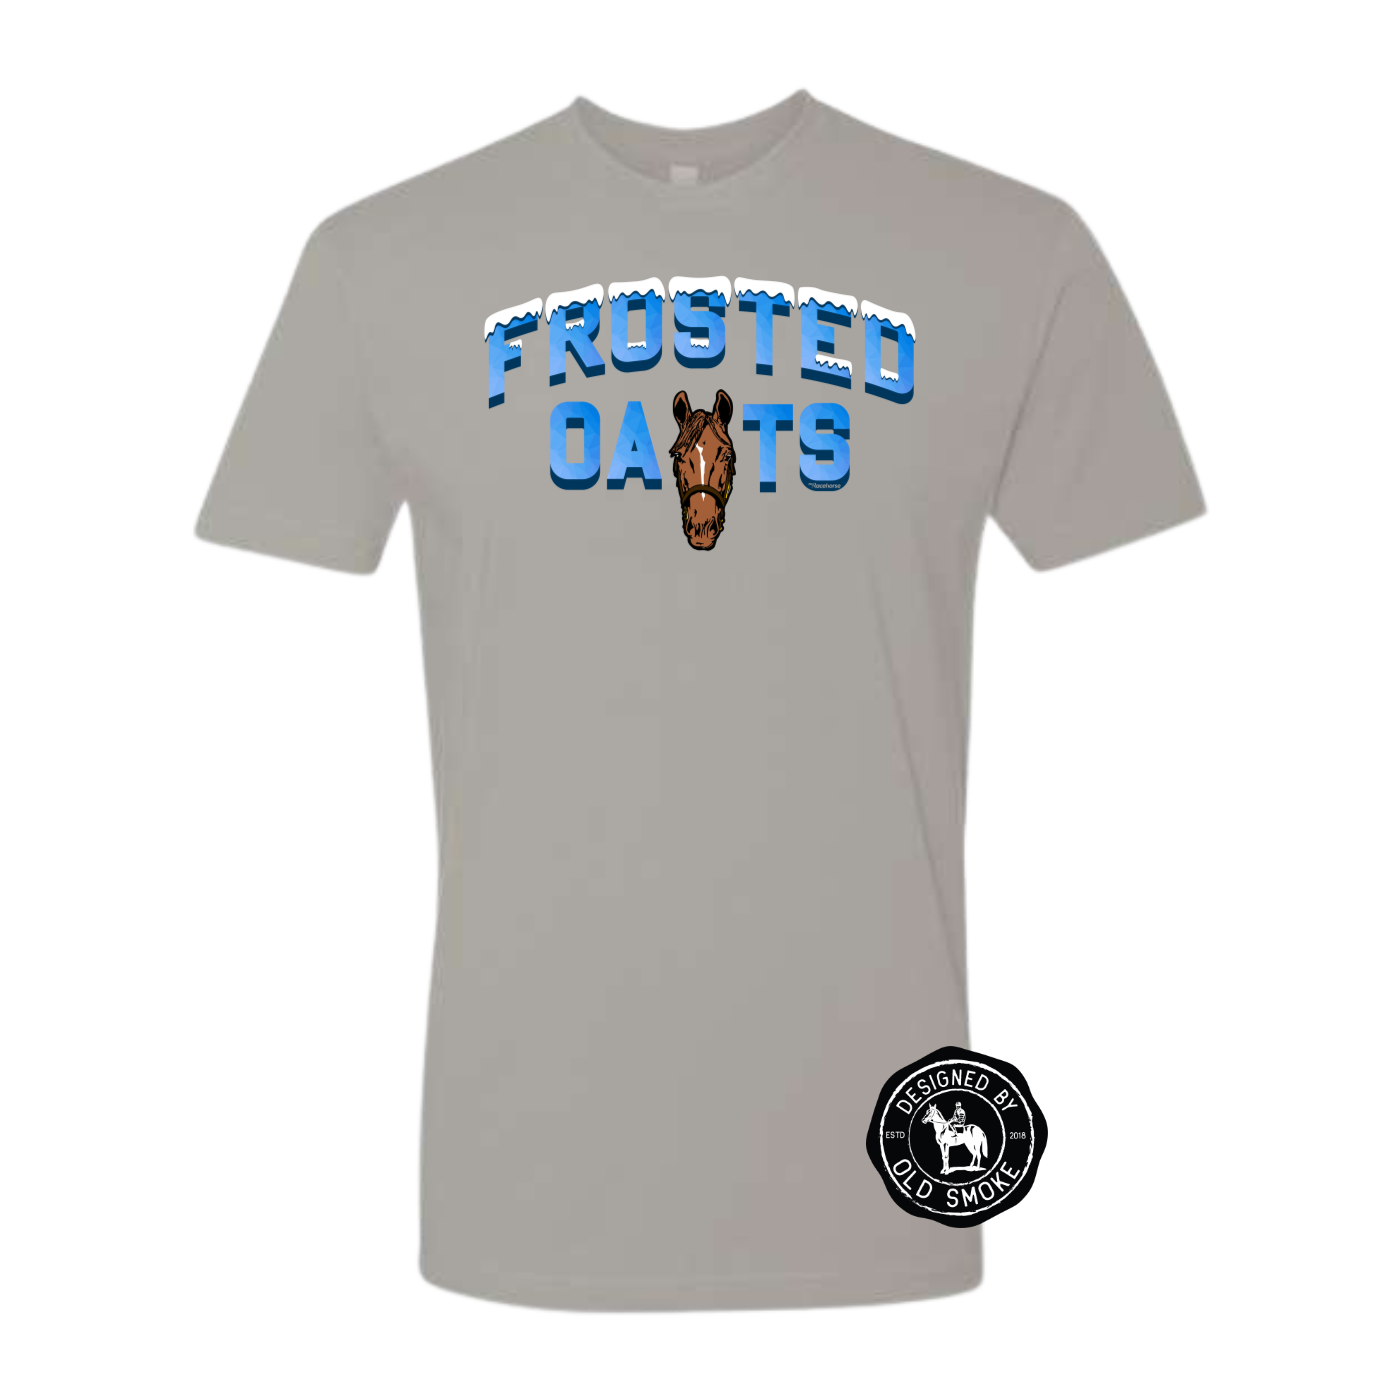 Frosted Oats Men's SS T Shirt